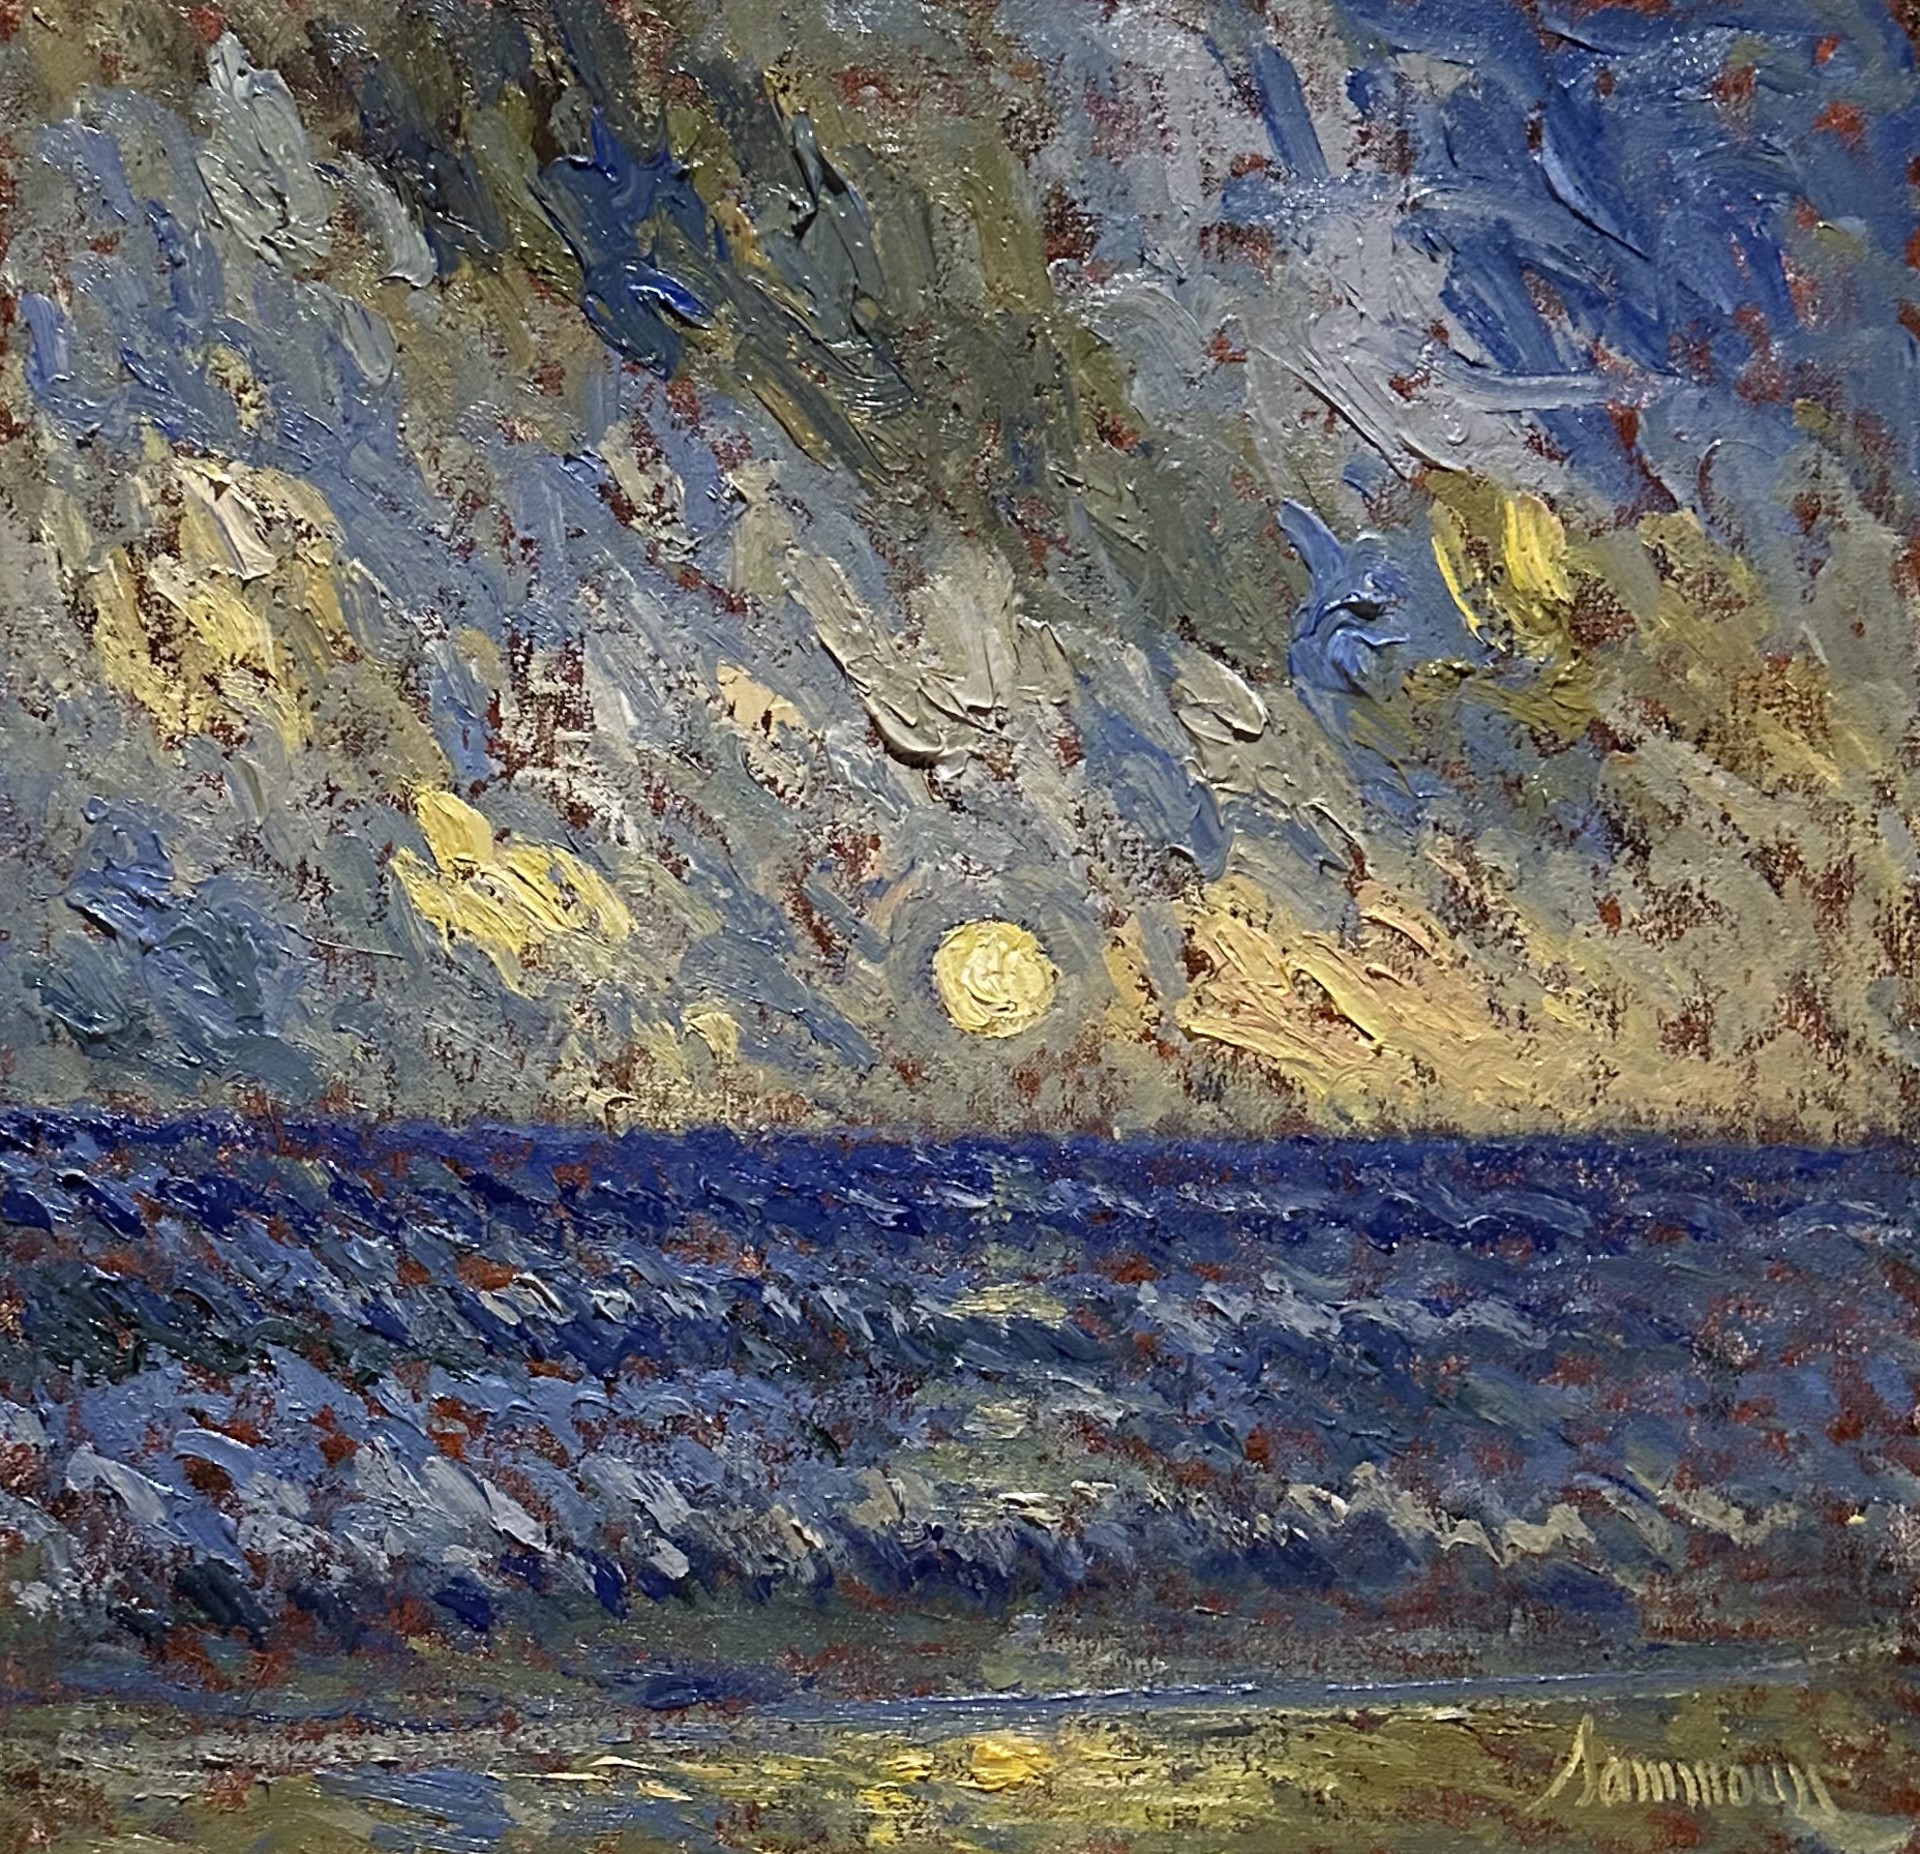 Le lever du Soleil sur la mer, 20x20 by Samir Sammoun